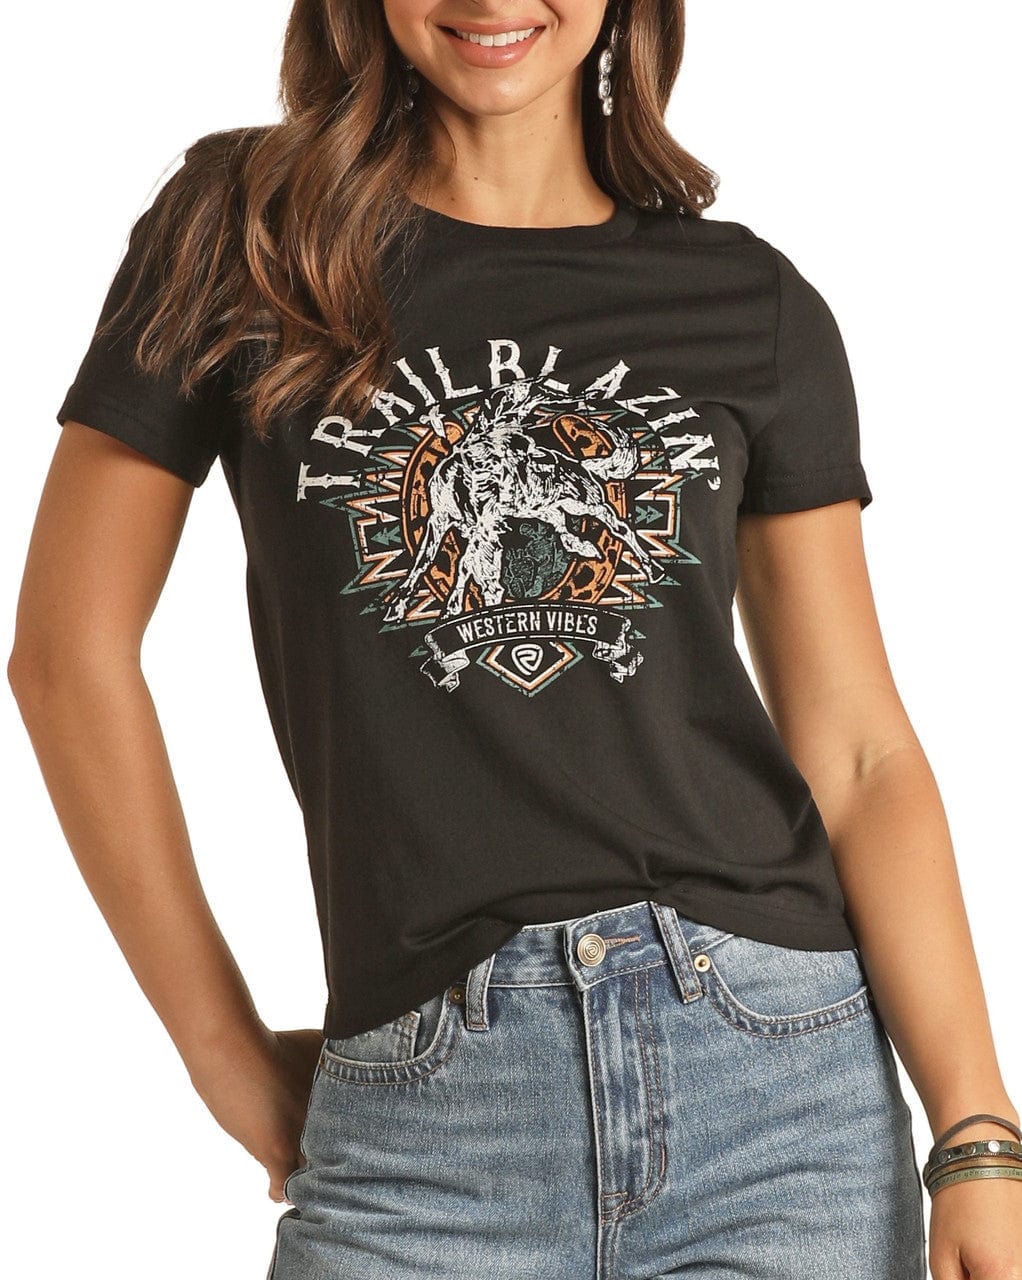 PANHANDLE SLIM Shirts Rock & Roll Cowgirl Women's Trail Blazin' Graphic Tee RRWT21R0YI